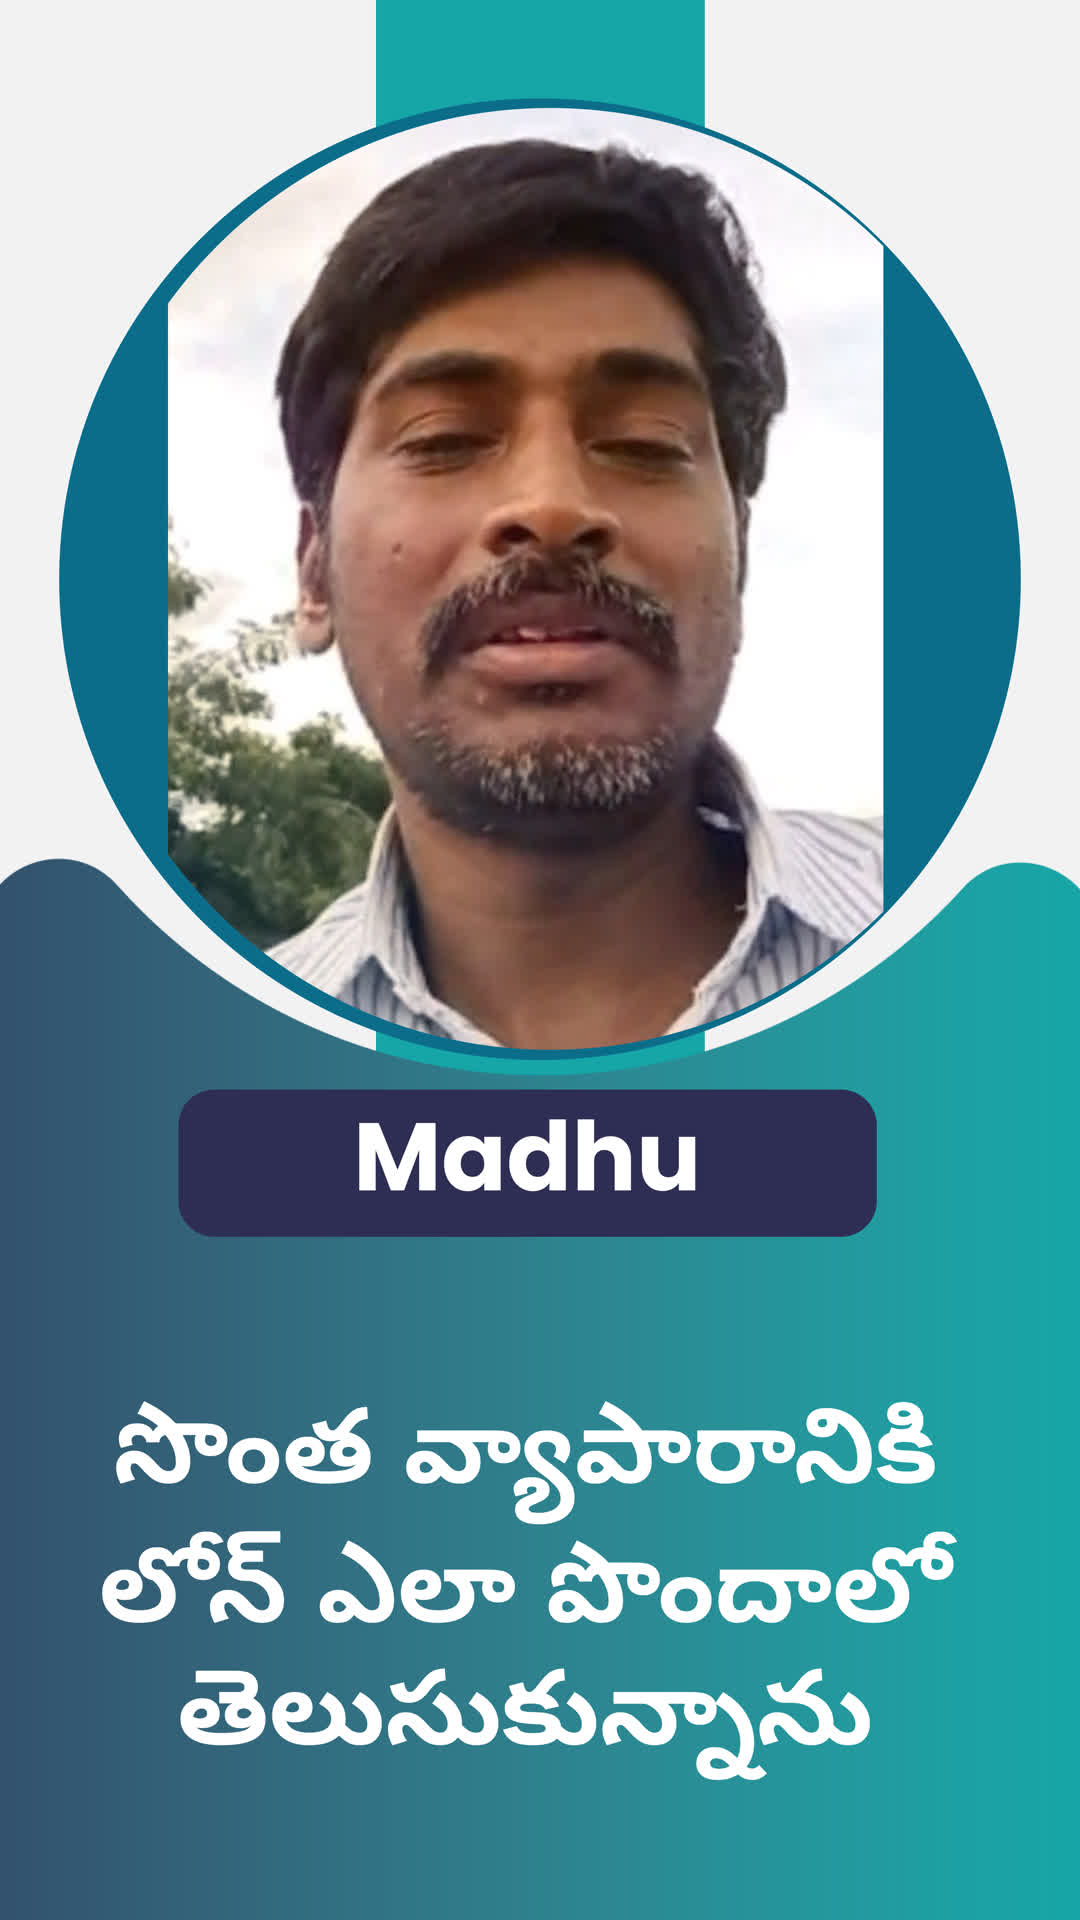 T madhu sudhan's Honest Review of ffreedom app - Kadapa - YSR - Cuddapah ,Telangana